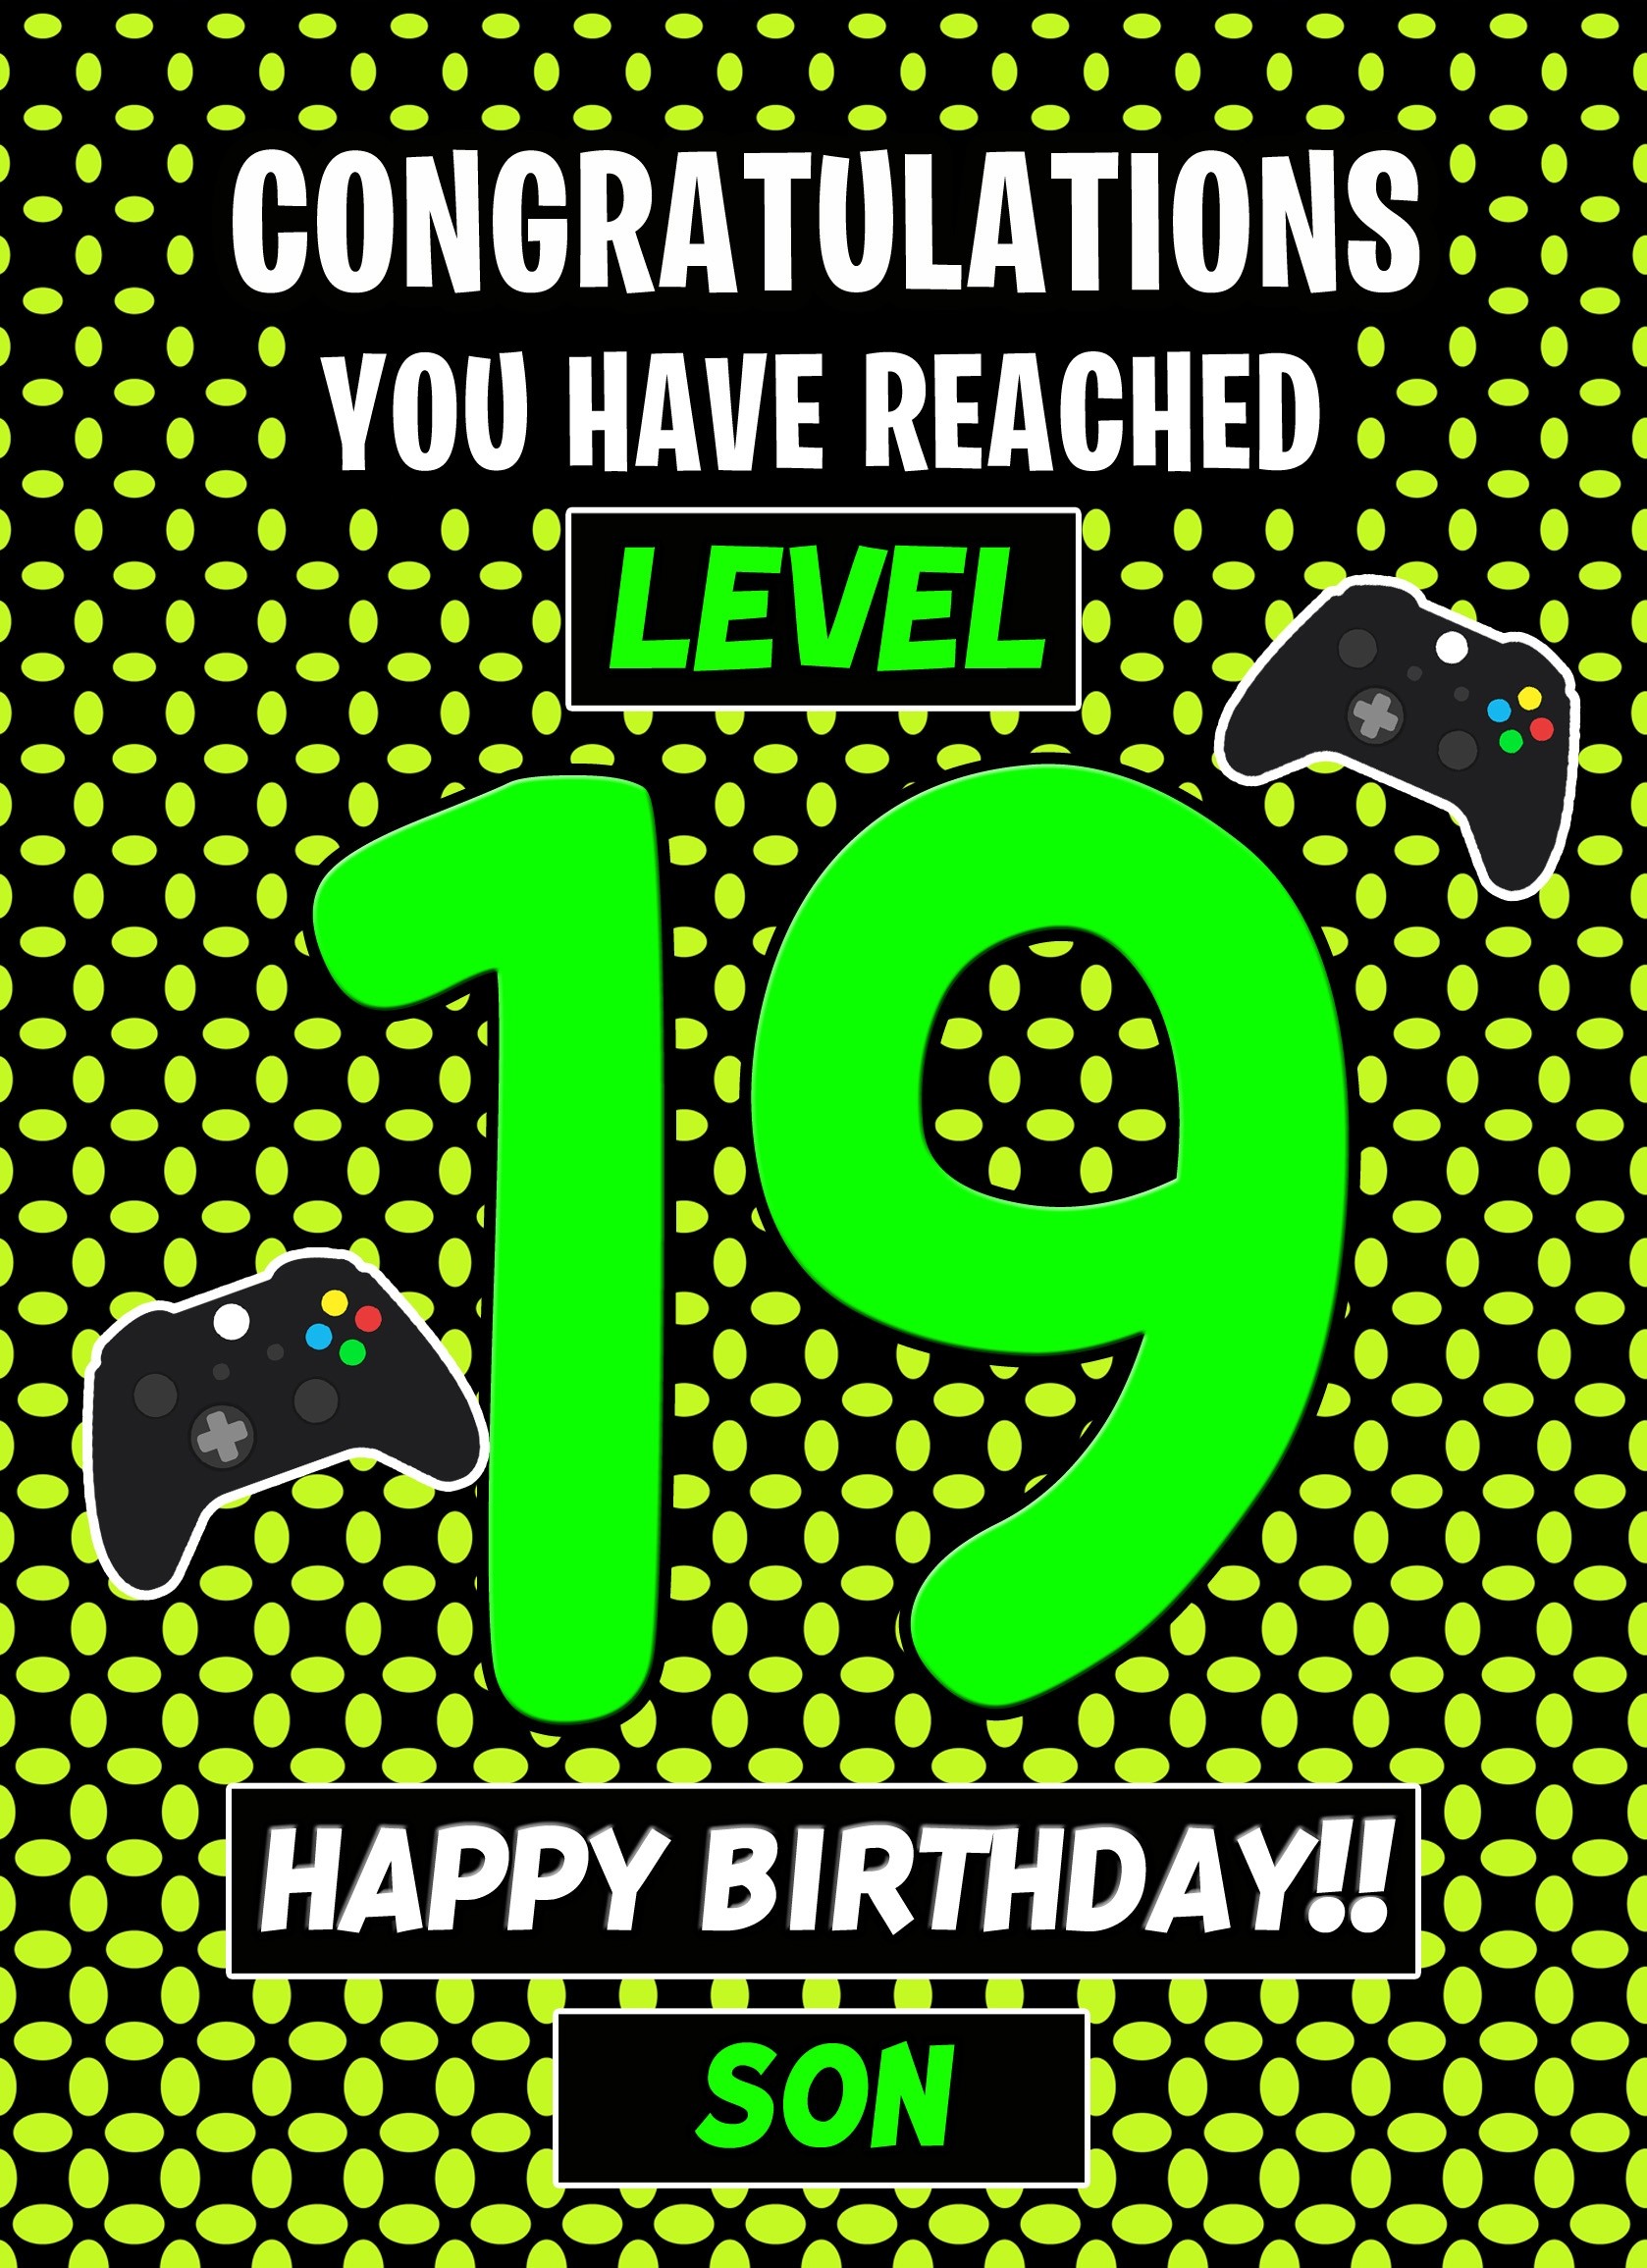 19th Level Gamer Birthday Card (Son)